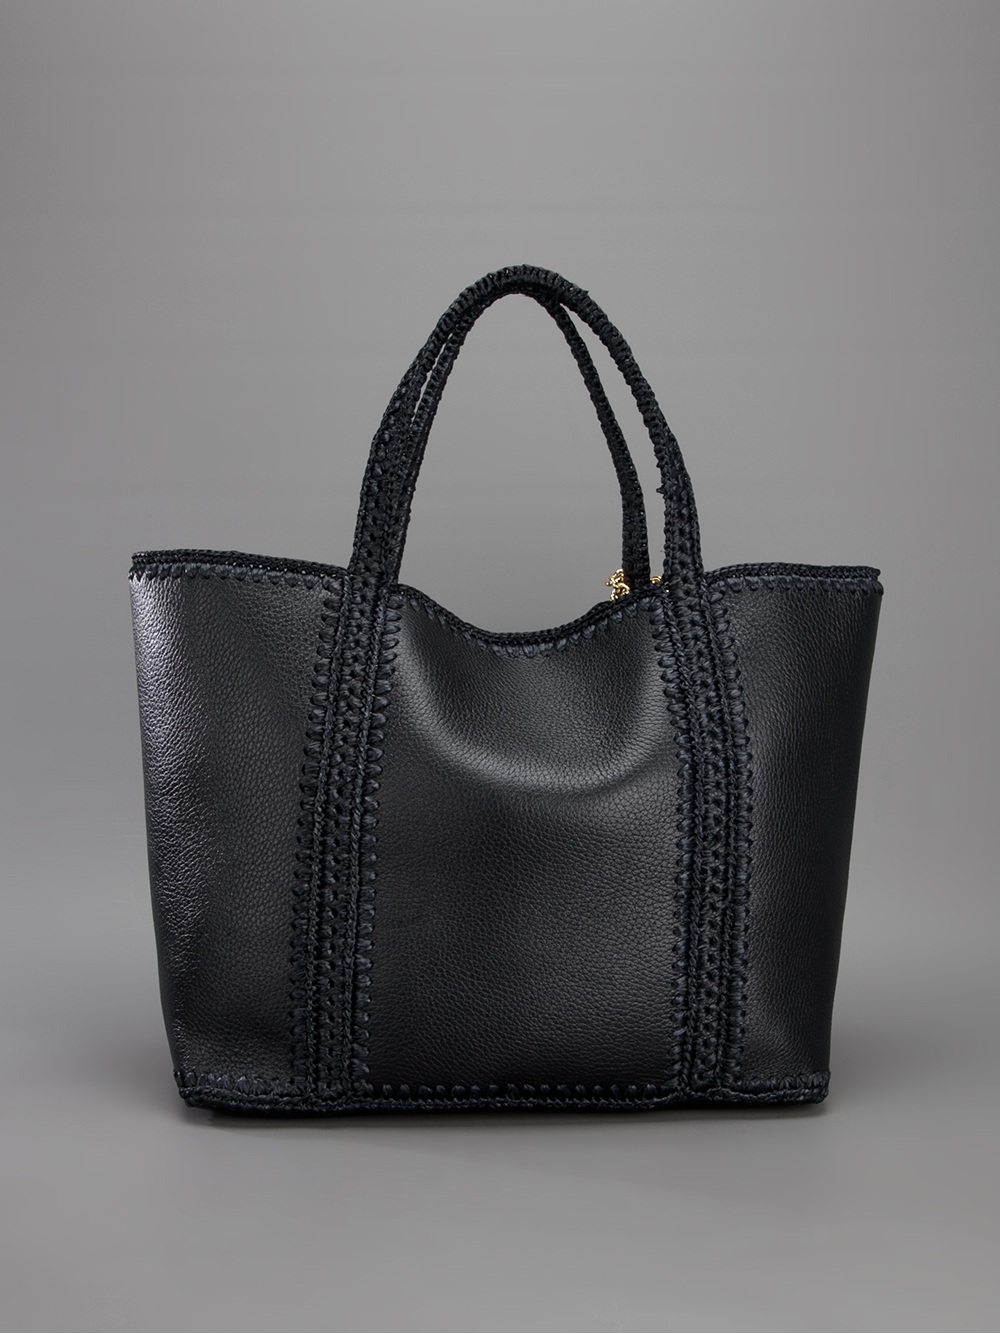 Dolce & gabbana Miss Escape Tote Bag in Black | Lyst